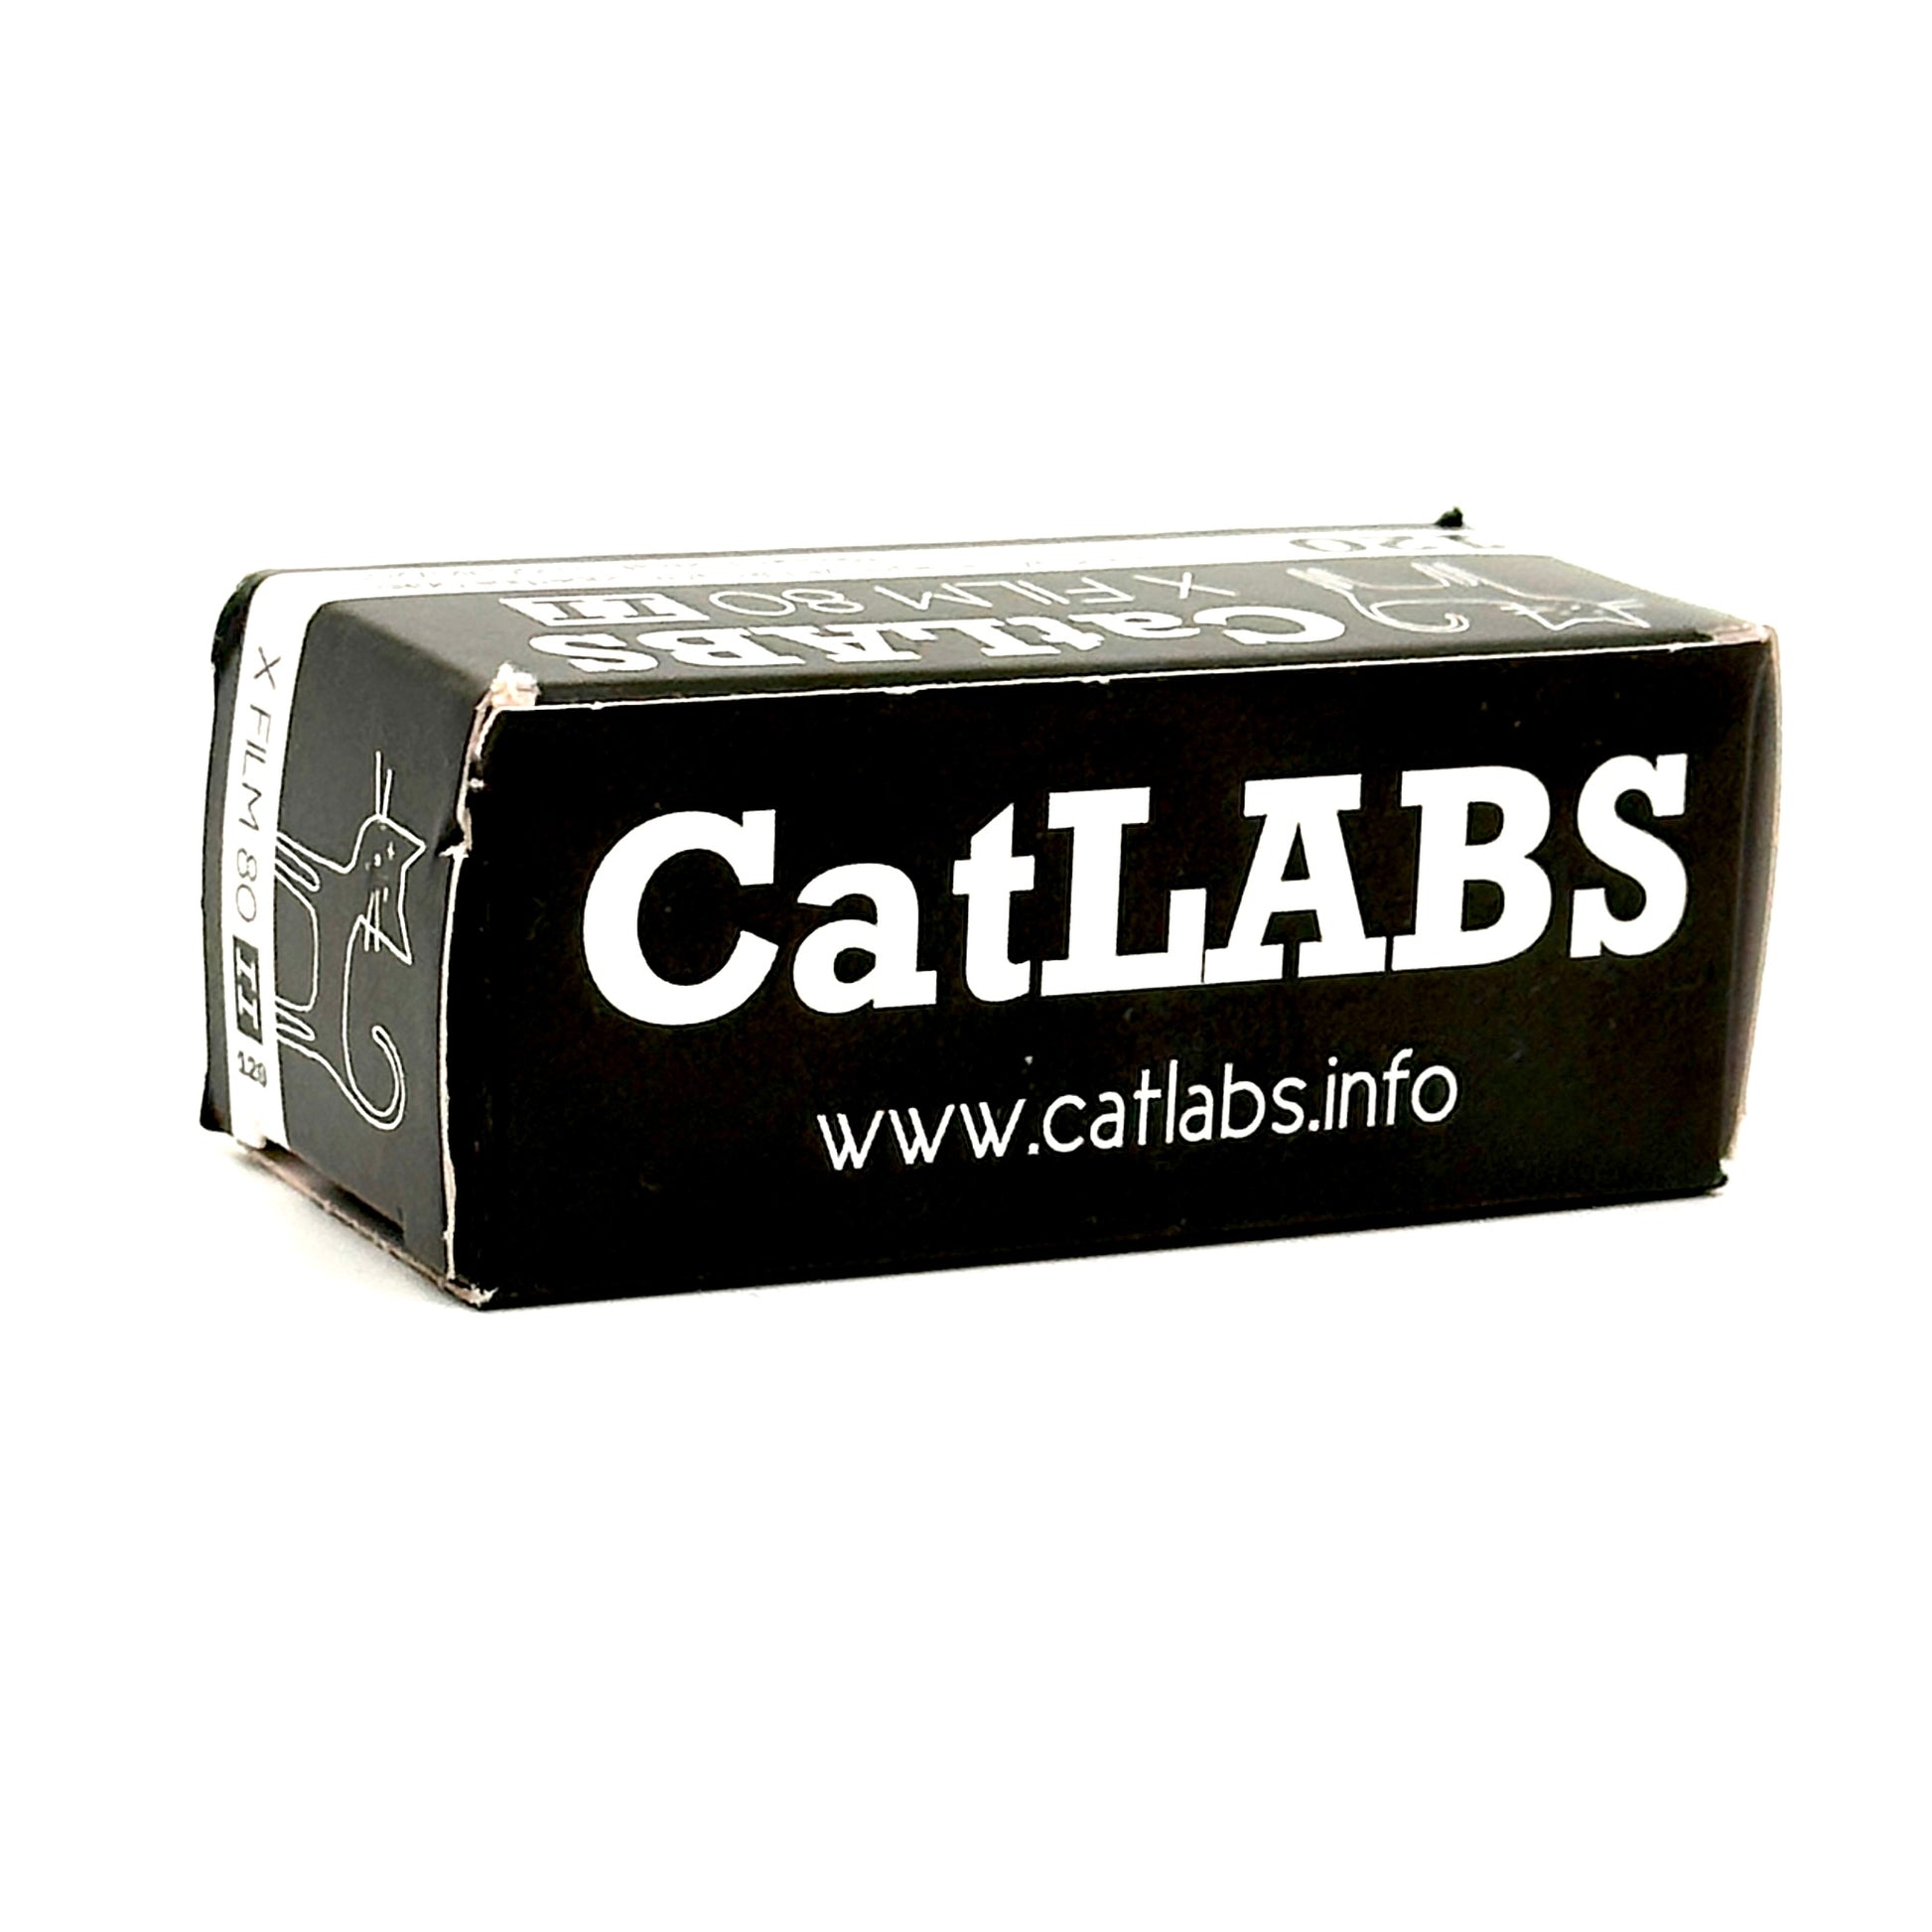 CatLABS X Film 80 II BW 120 Medium Format Film